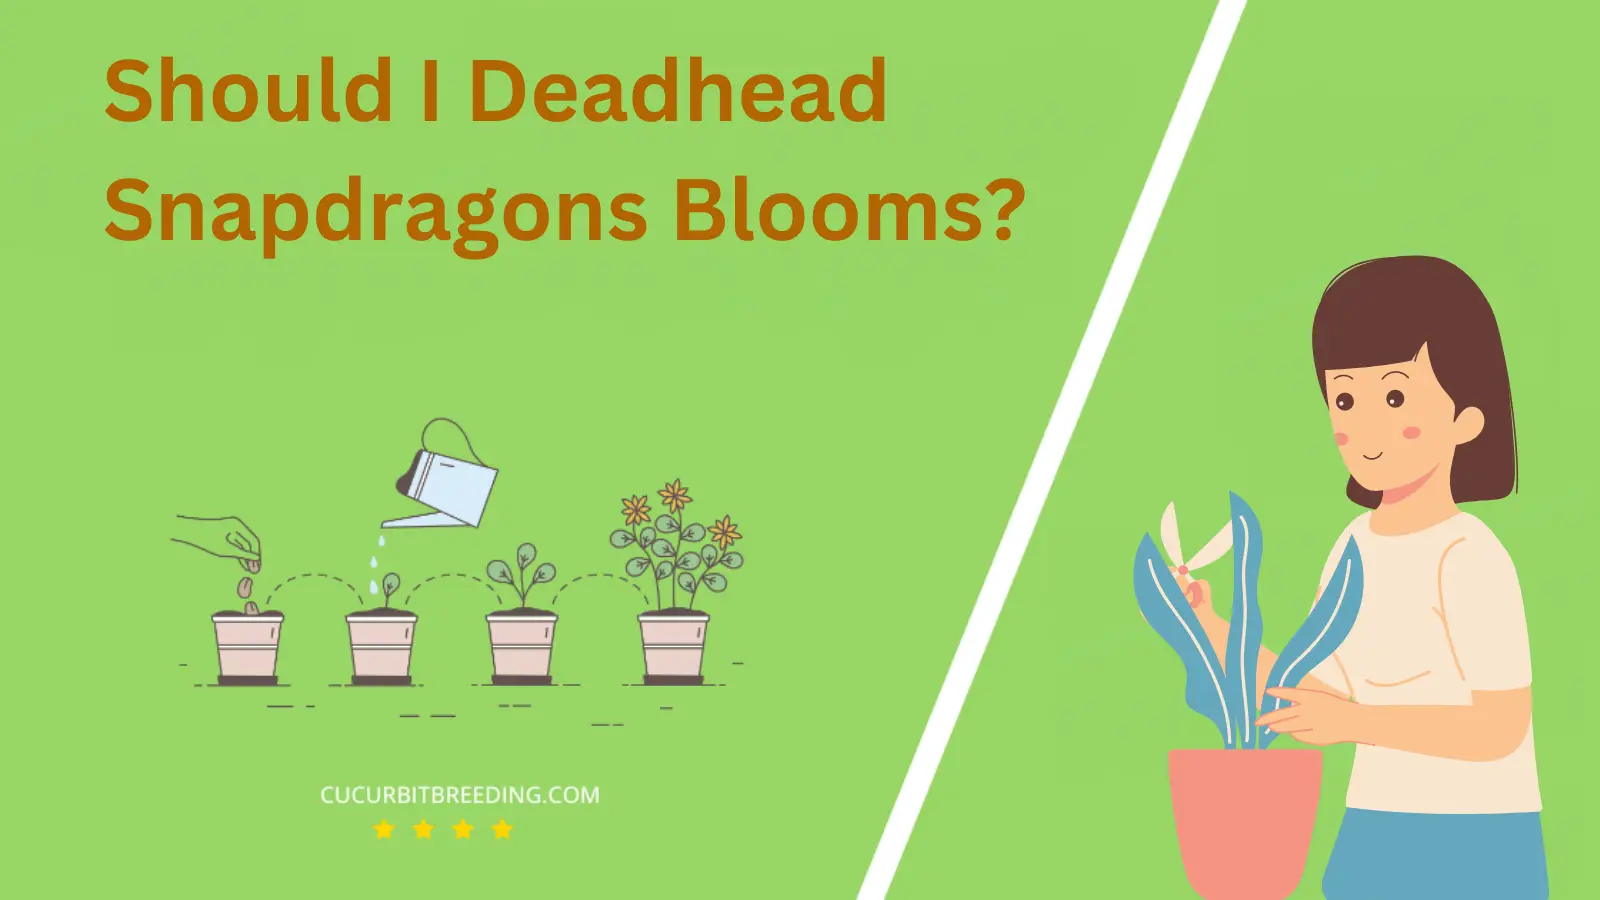 Should I Deadhead Snapdragons Blooms?